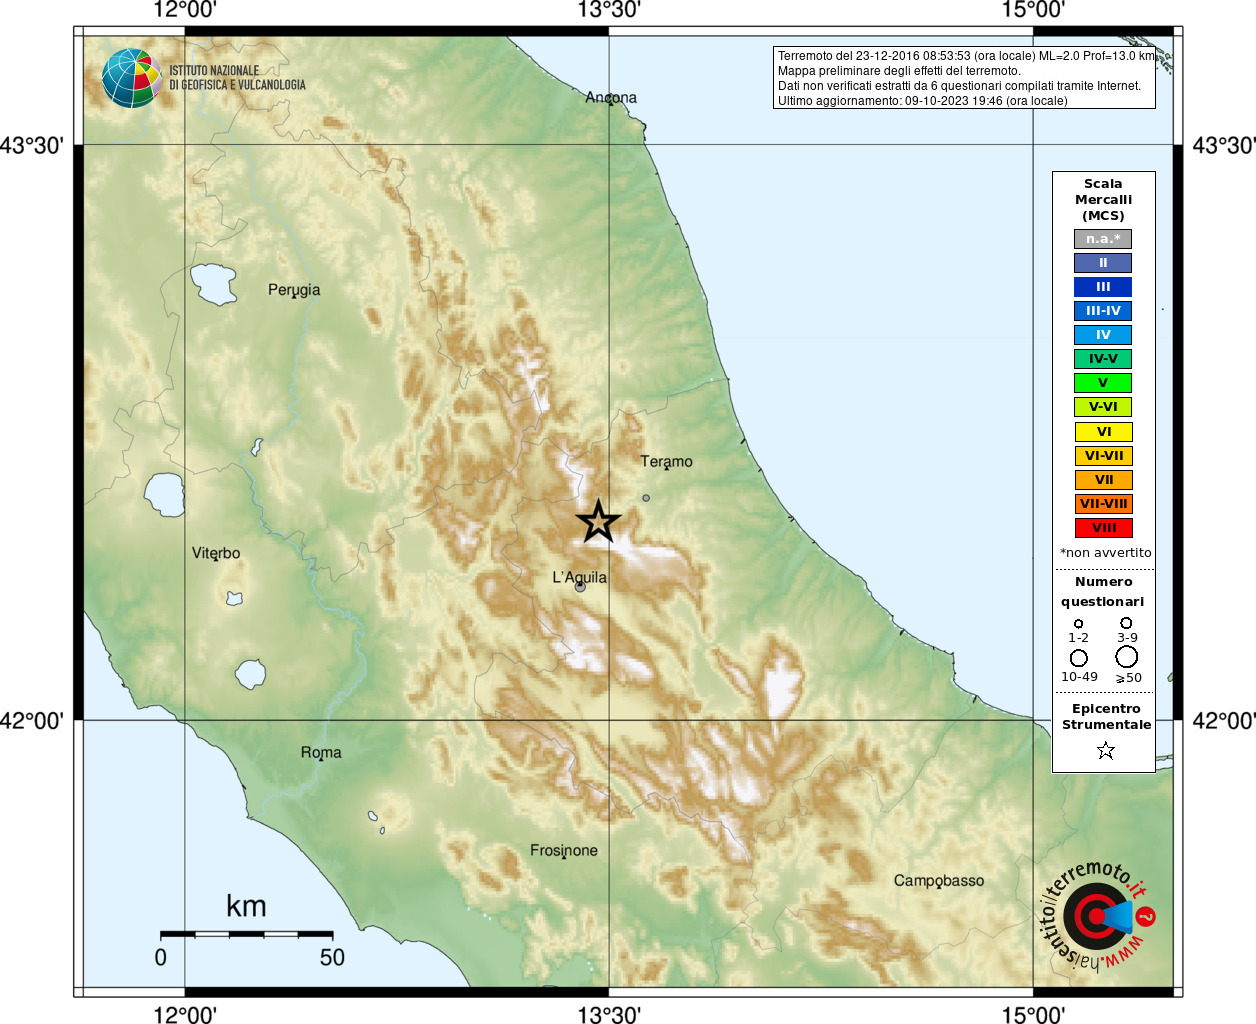 Earthquake 4 km SW Crognaleto (TE), Magnitude ML 2.0, 23 December 2016 time 08:53:53 ...1252 x 1024